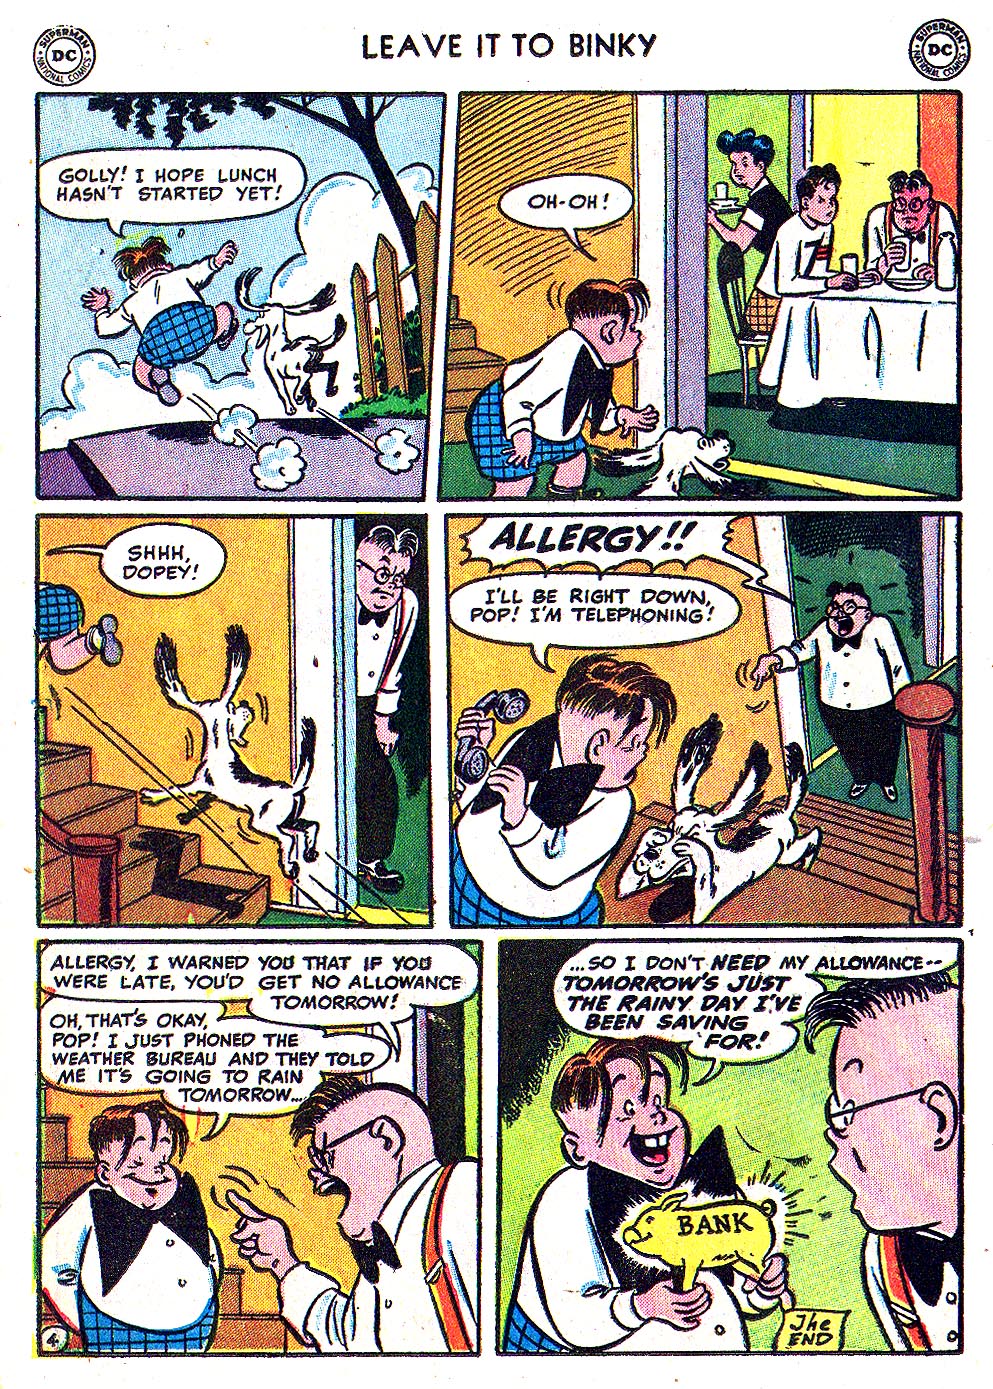 Read online Leave it to Binky comic -  Issue #22 - 36